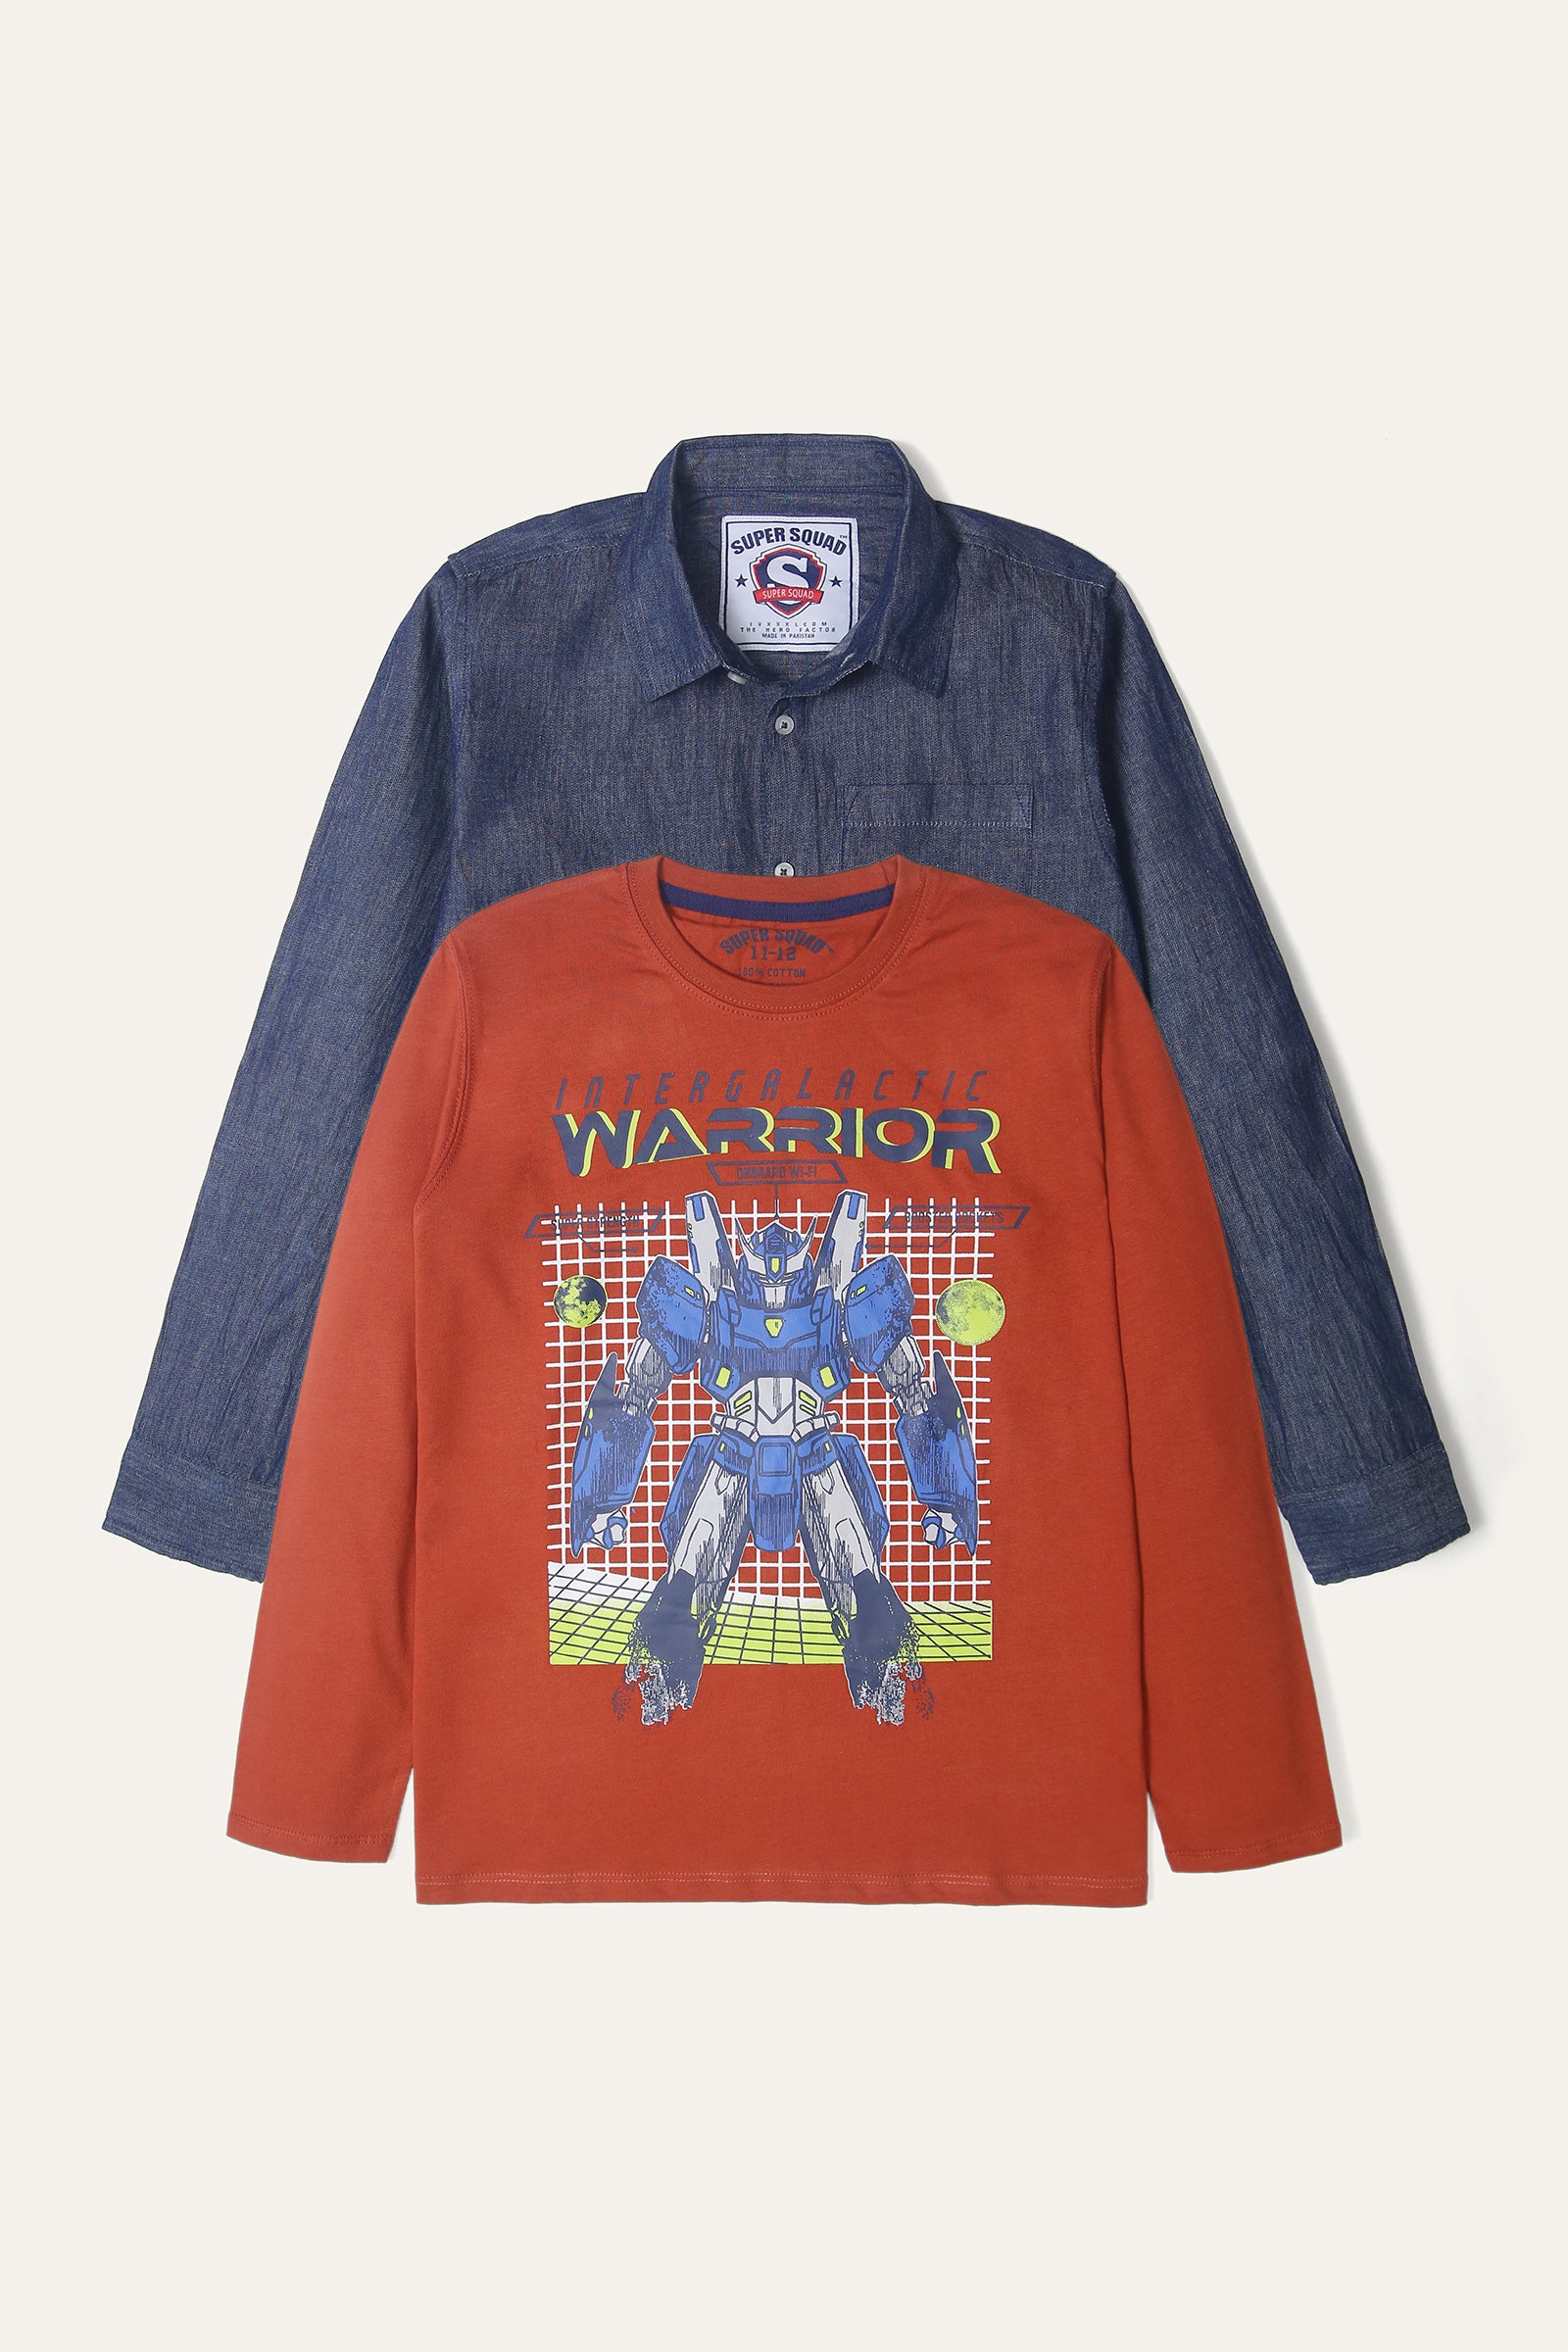 Shirt & T-Shirt Set Pack - Soft Jersey/Woven | Assorted - Best Kids Clothing Brands In Pakistan Online|Minnie Minors